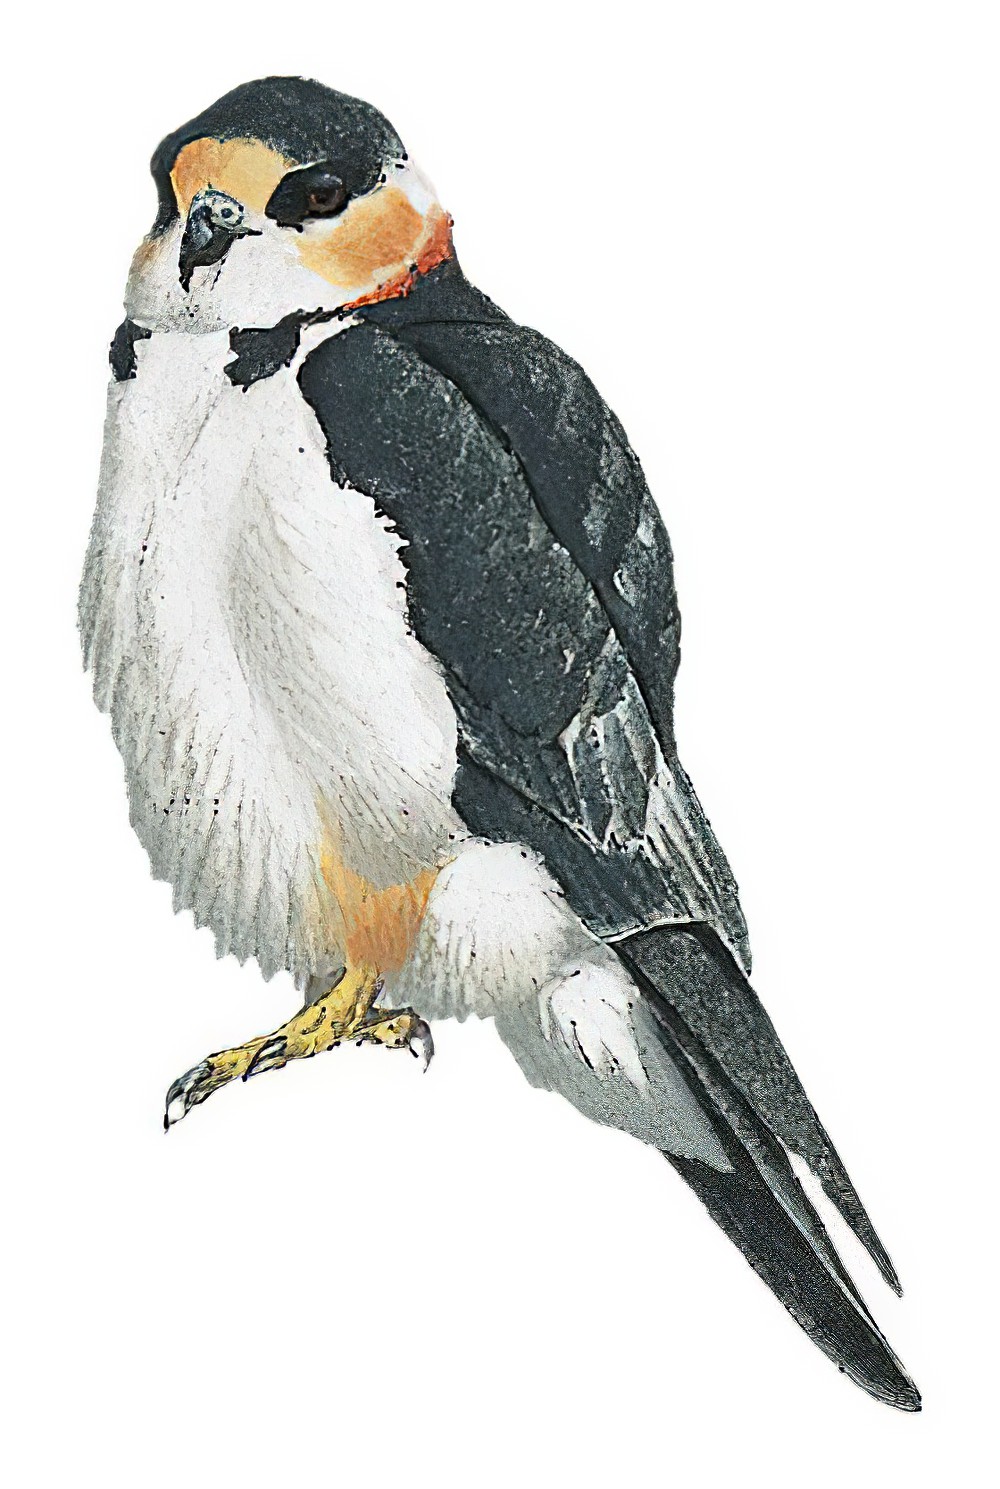 Pearl Kite / Gampsonyx swainsonii